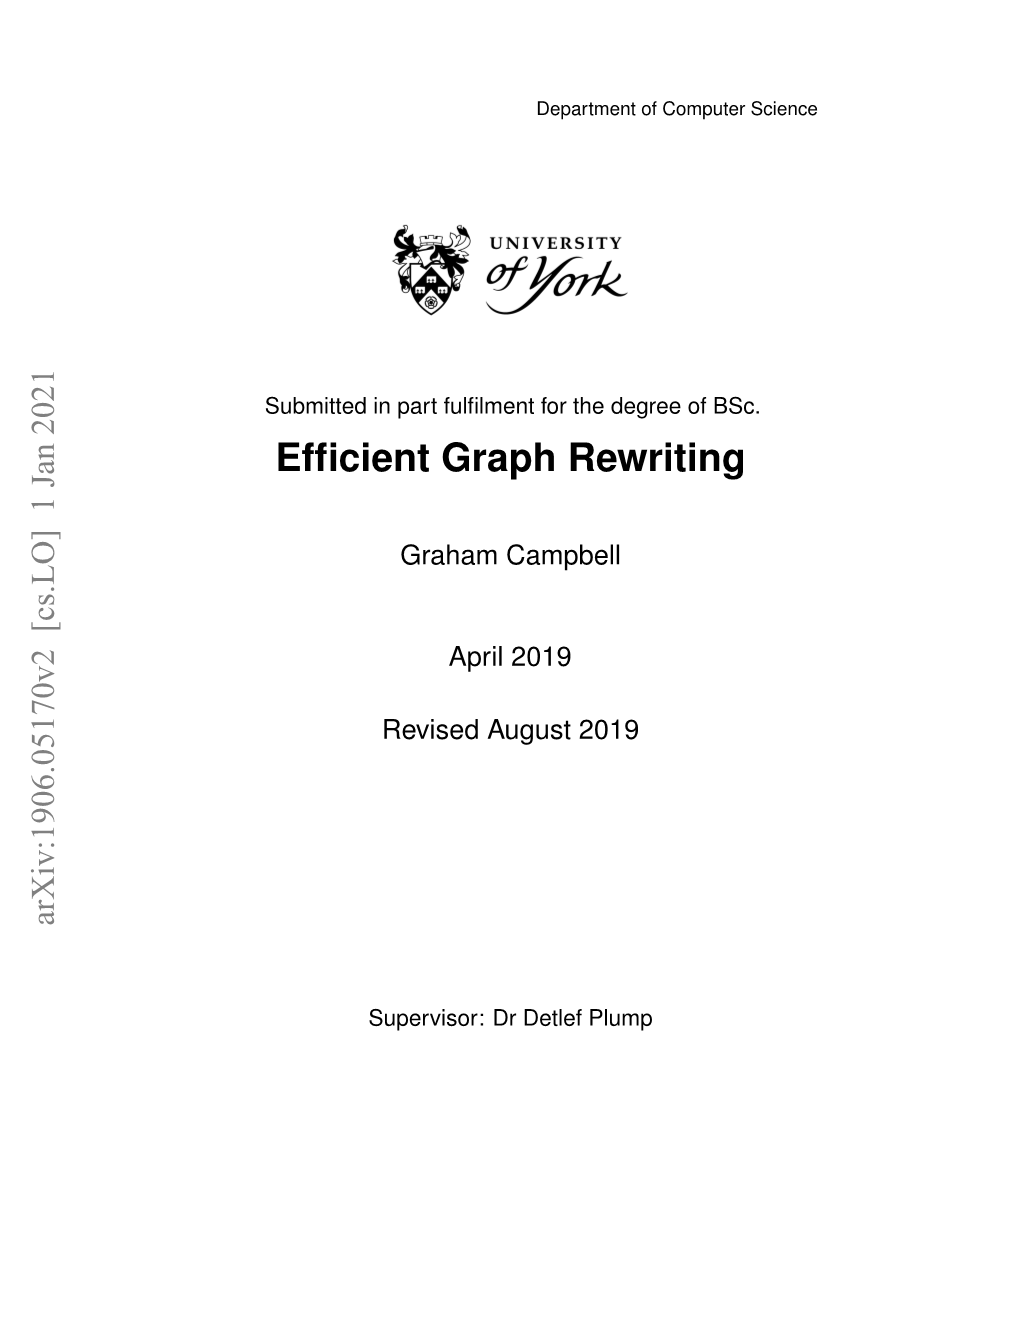 Efficient Graph Rewriting